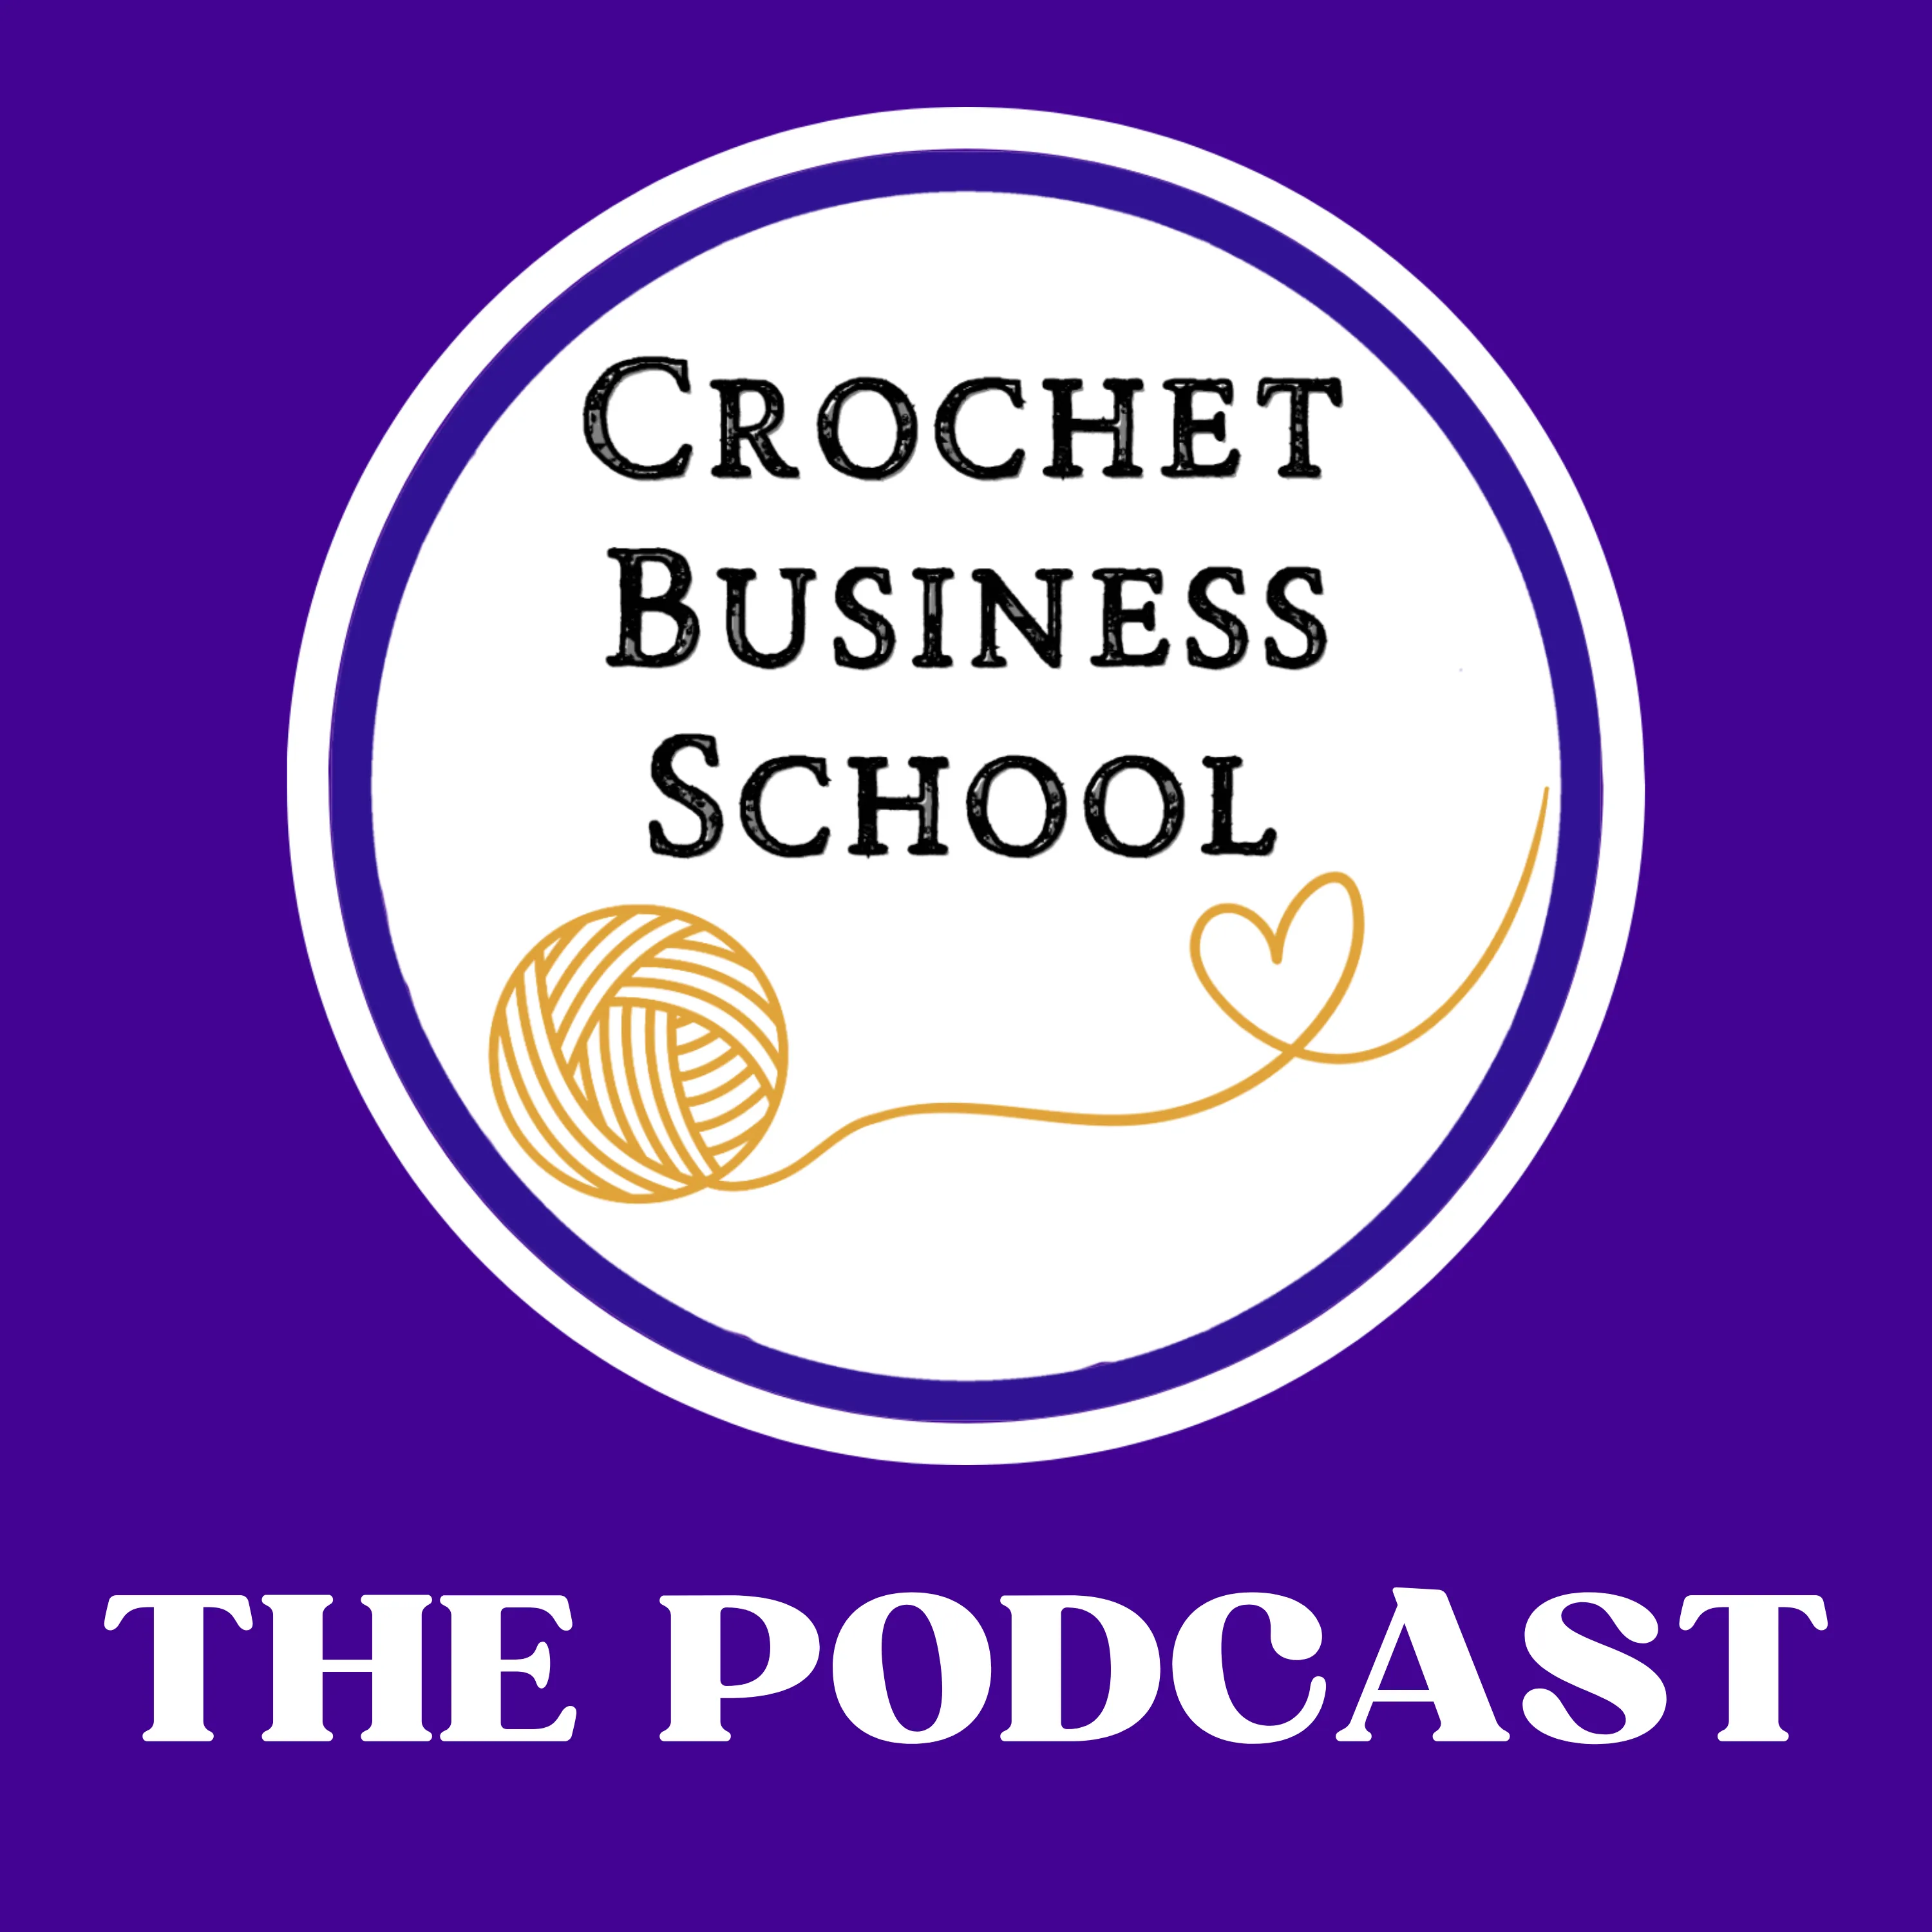 The Crochet Business School Podcast